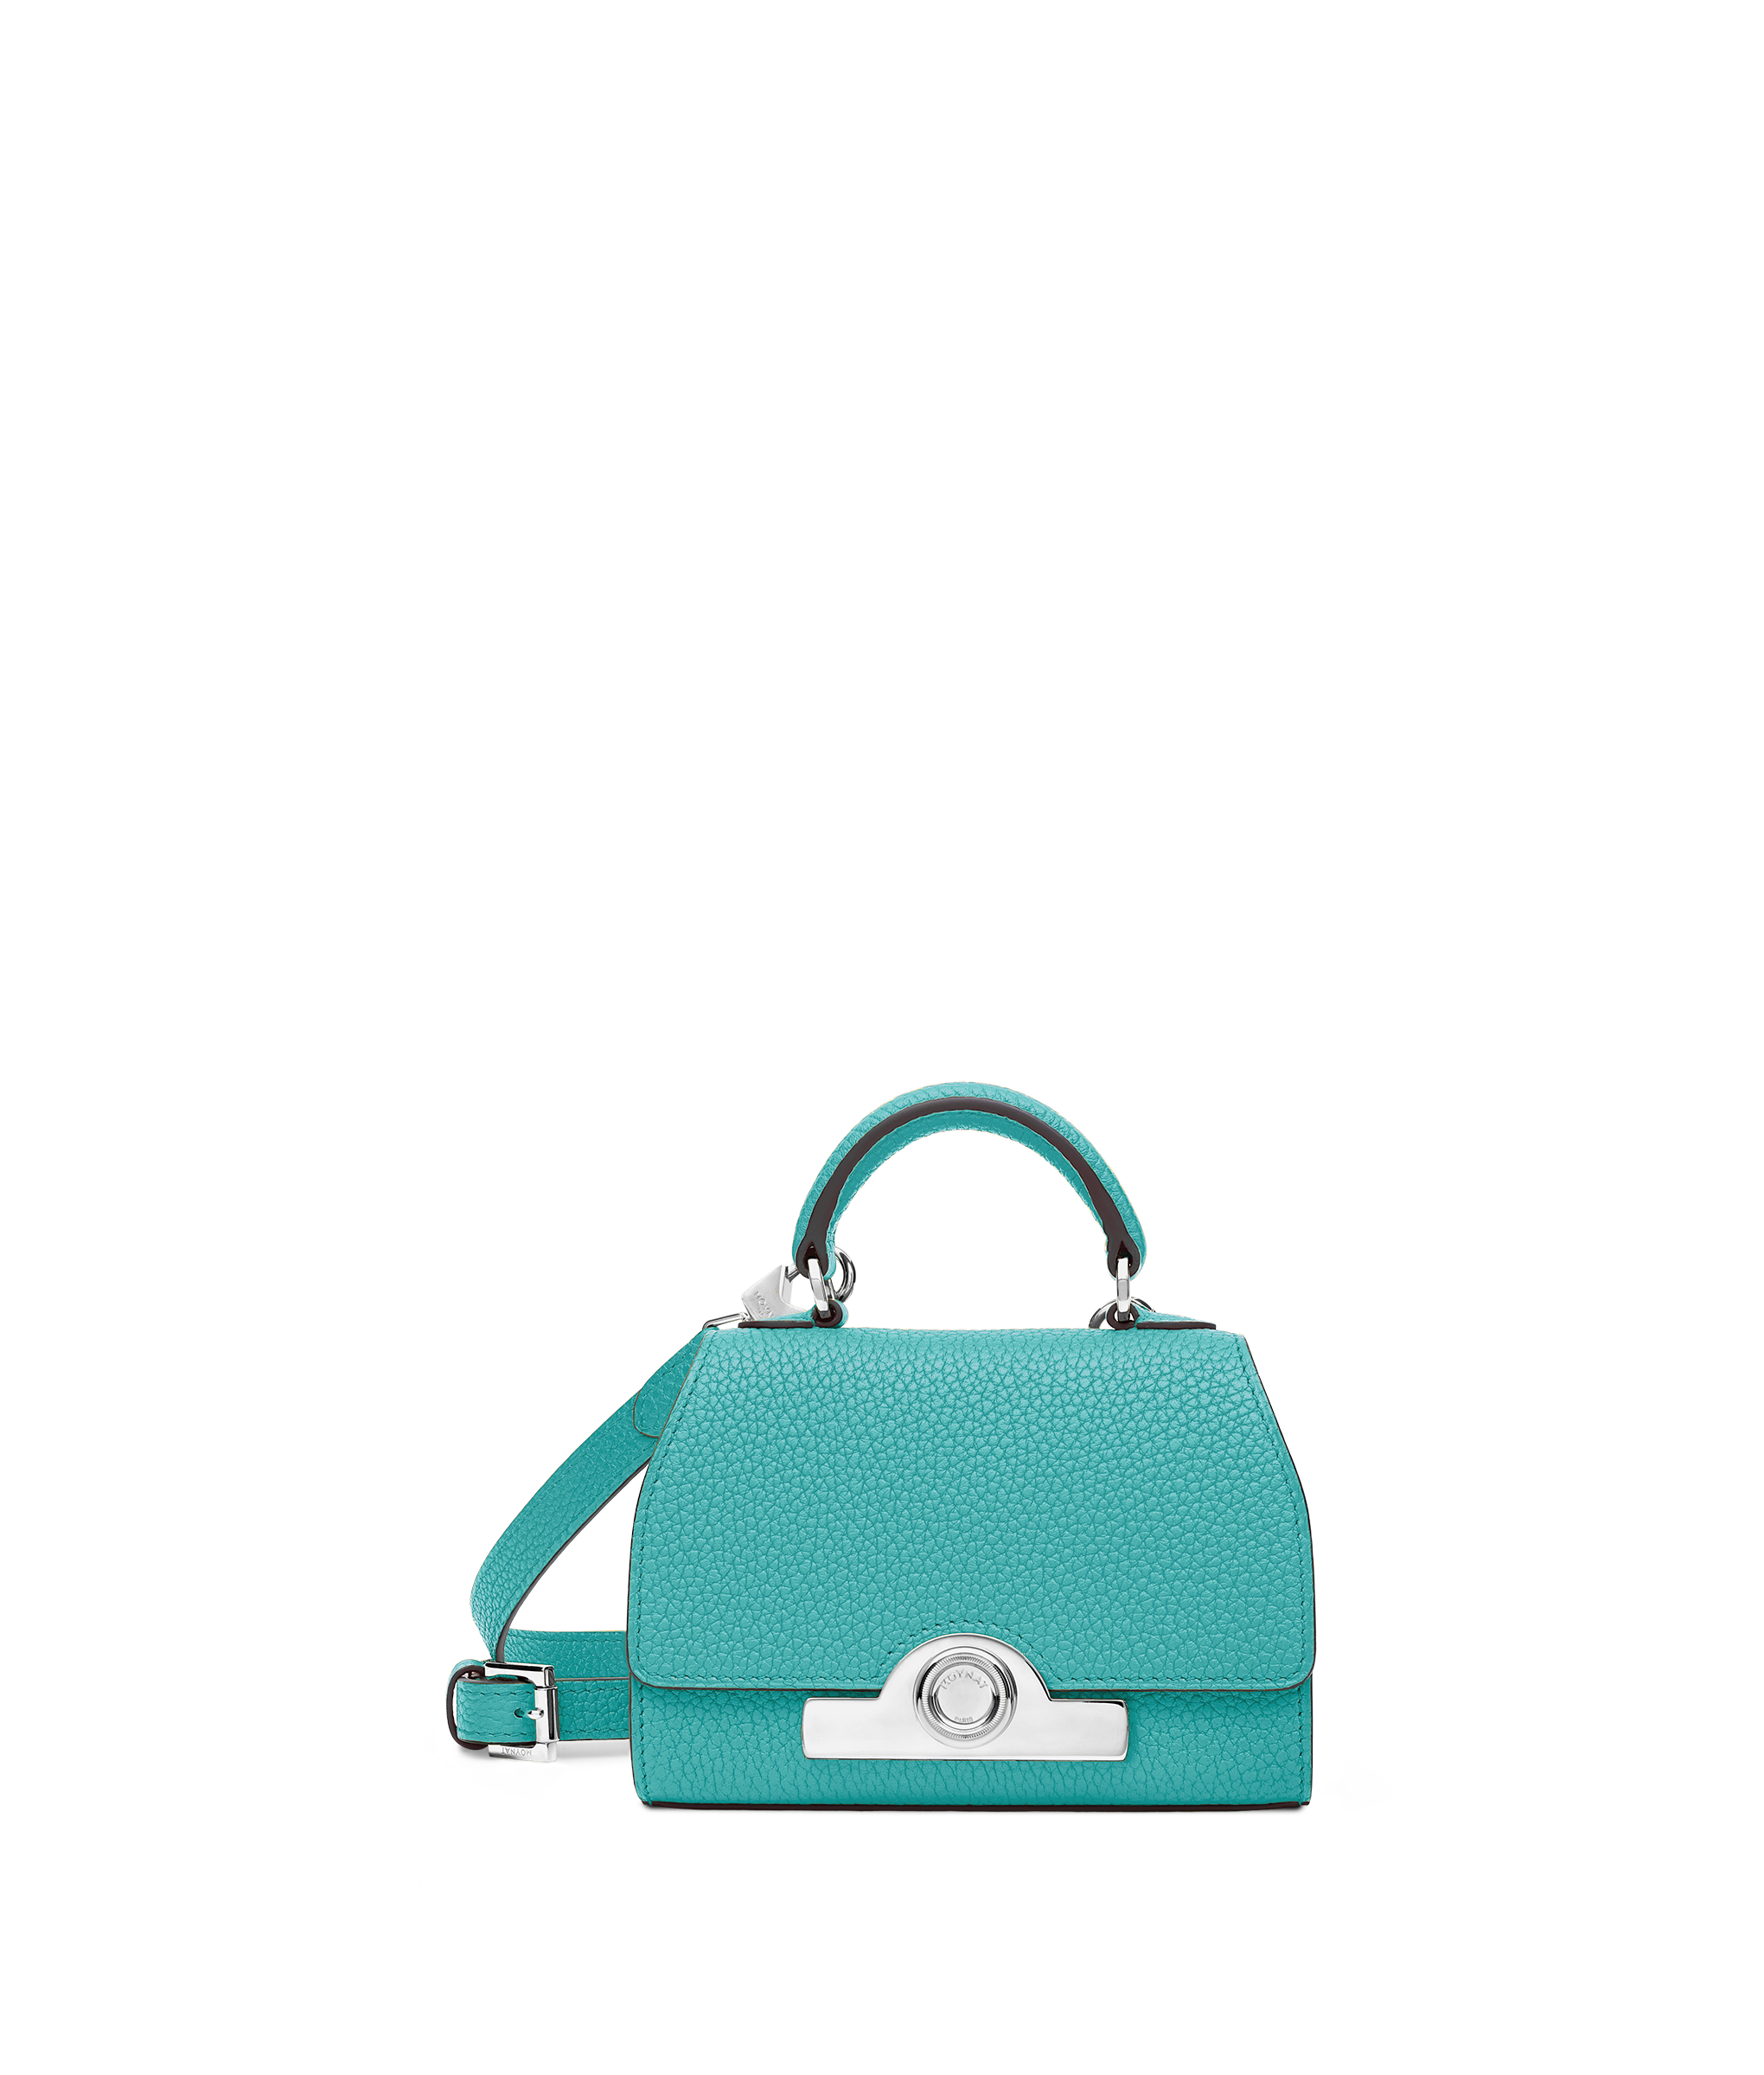 Moynat Paris - Réjane Nano Handbag - Blue - in Leather - Luxury